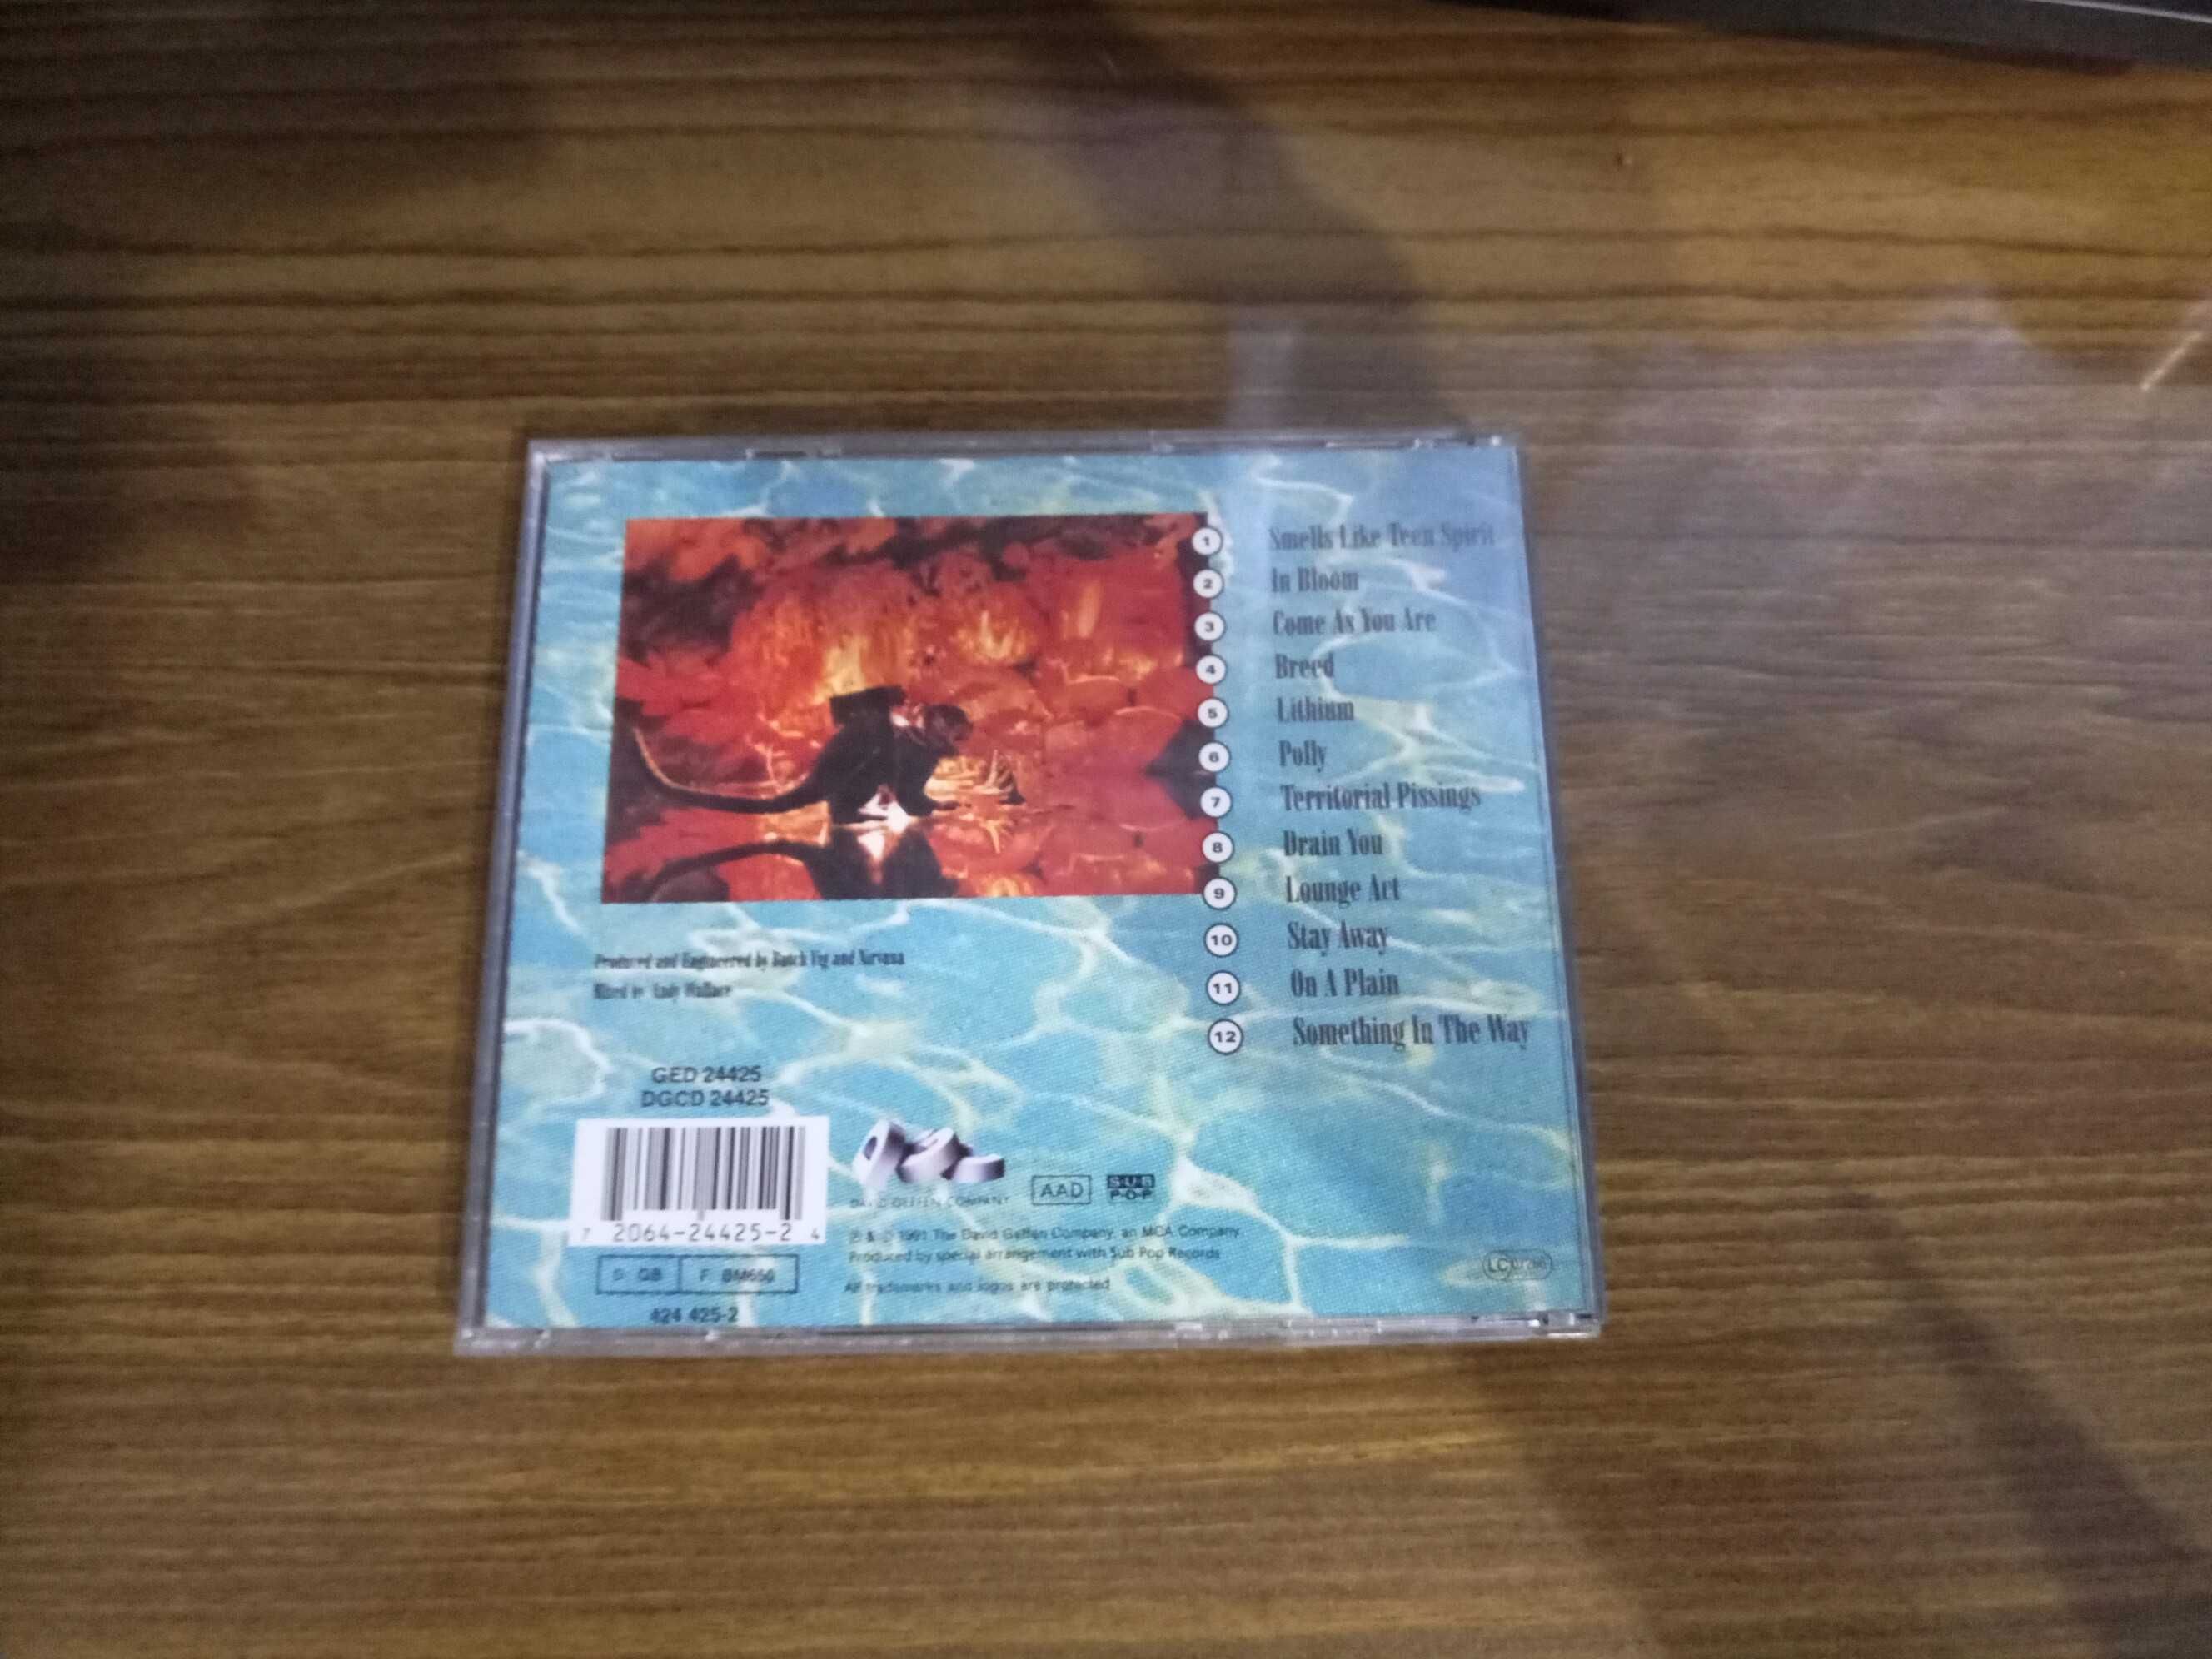 Фирменный cd Nirvana "Nevermind"